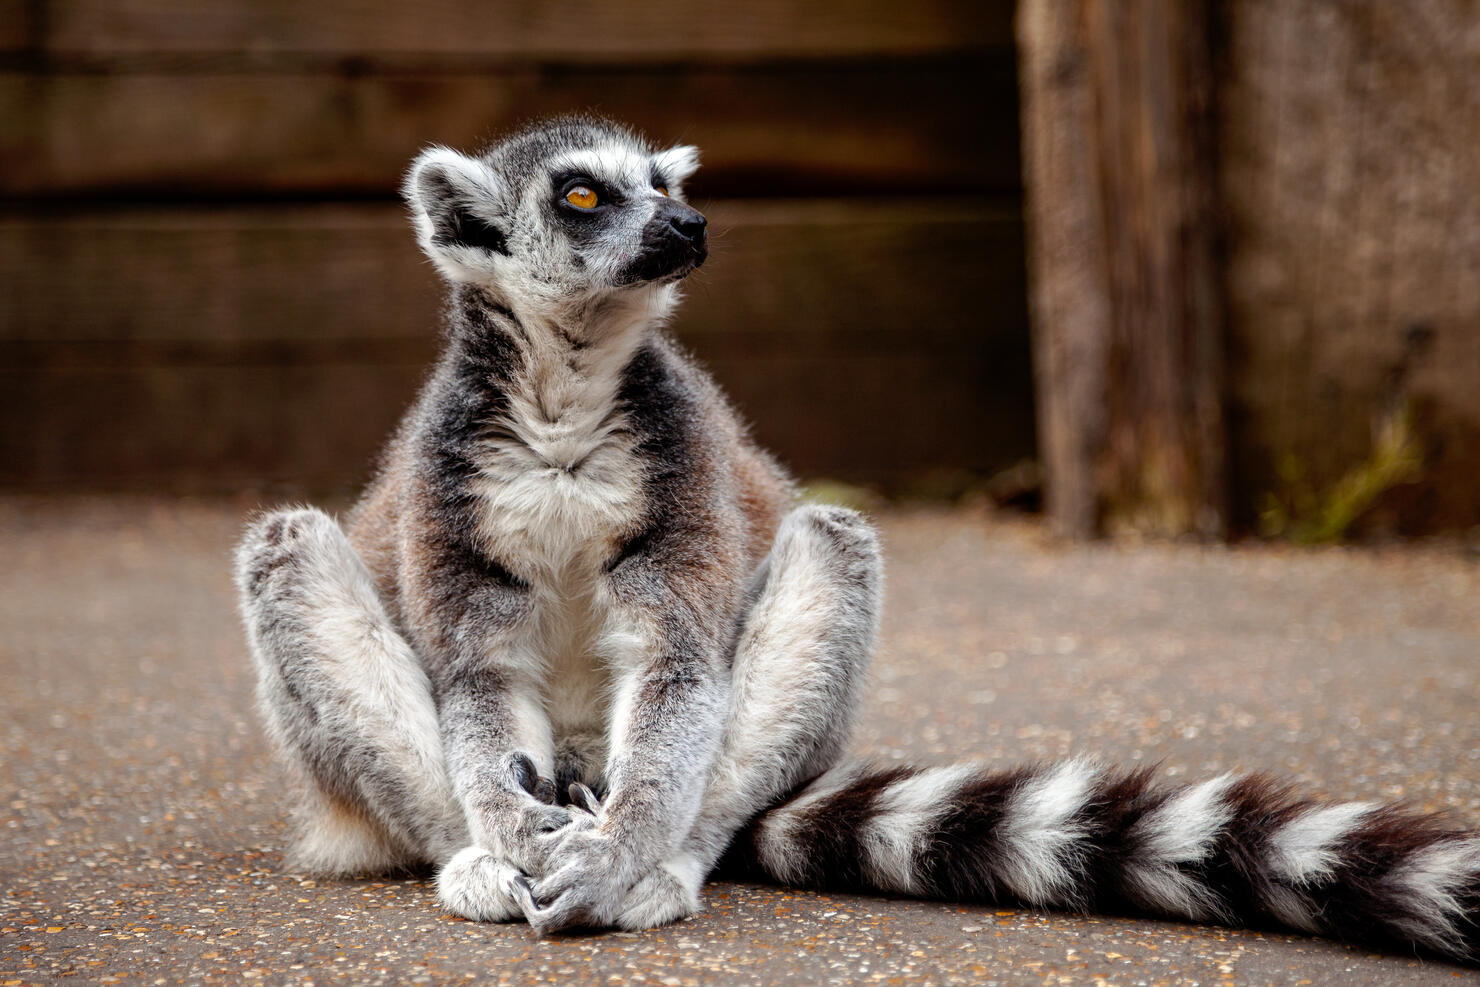 A lemur in the zoo